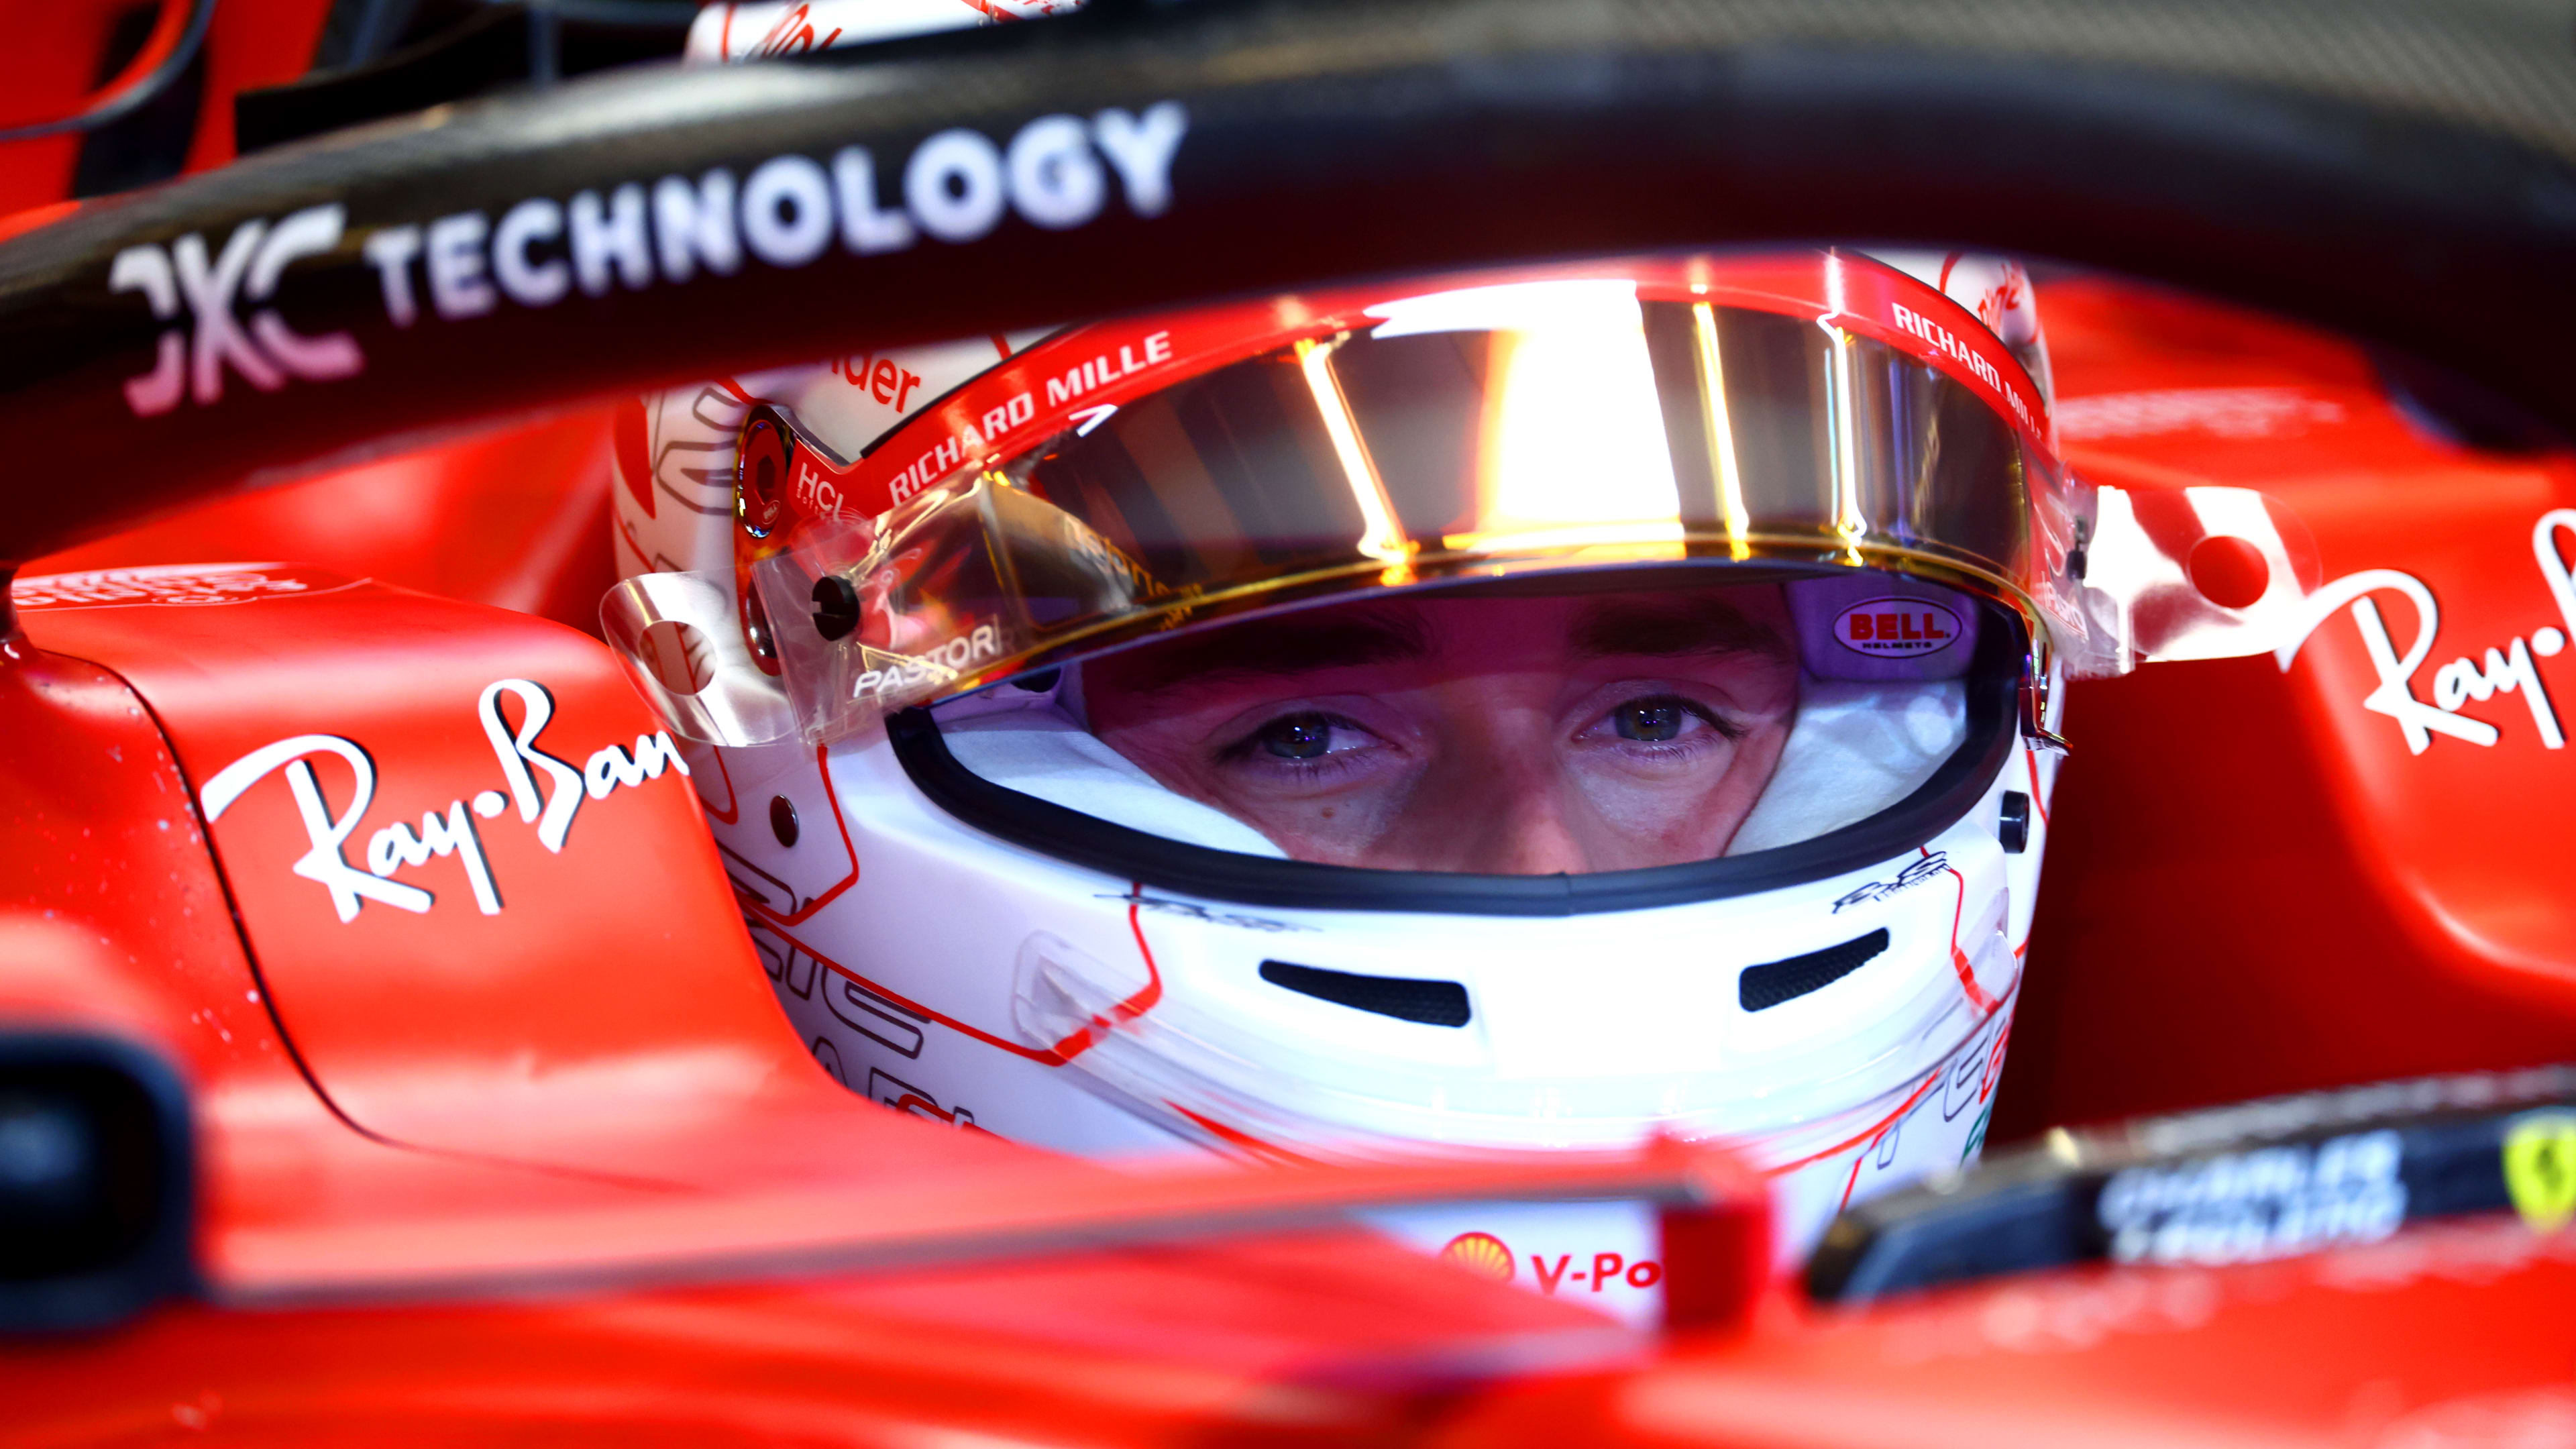 ABU DHABI, UNITED ARAB EMIRATES - NOVEMBER 24: Charles Leclerc of Monaco and Ferrari prepares to